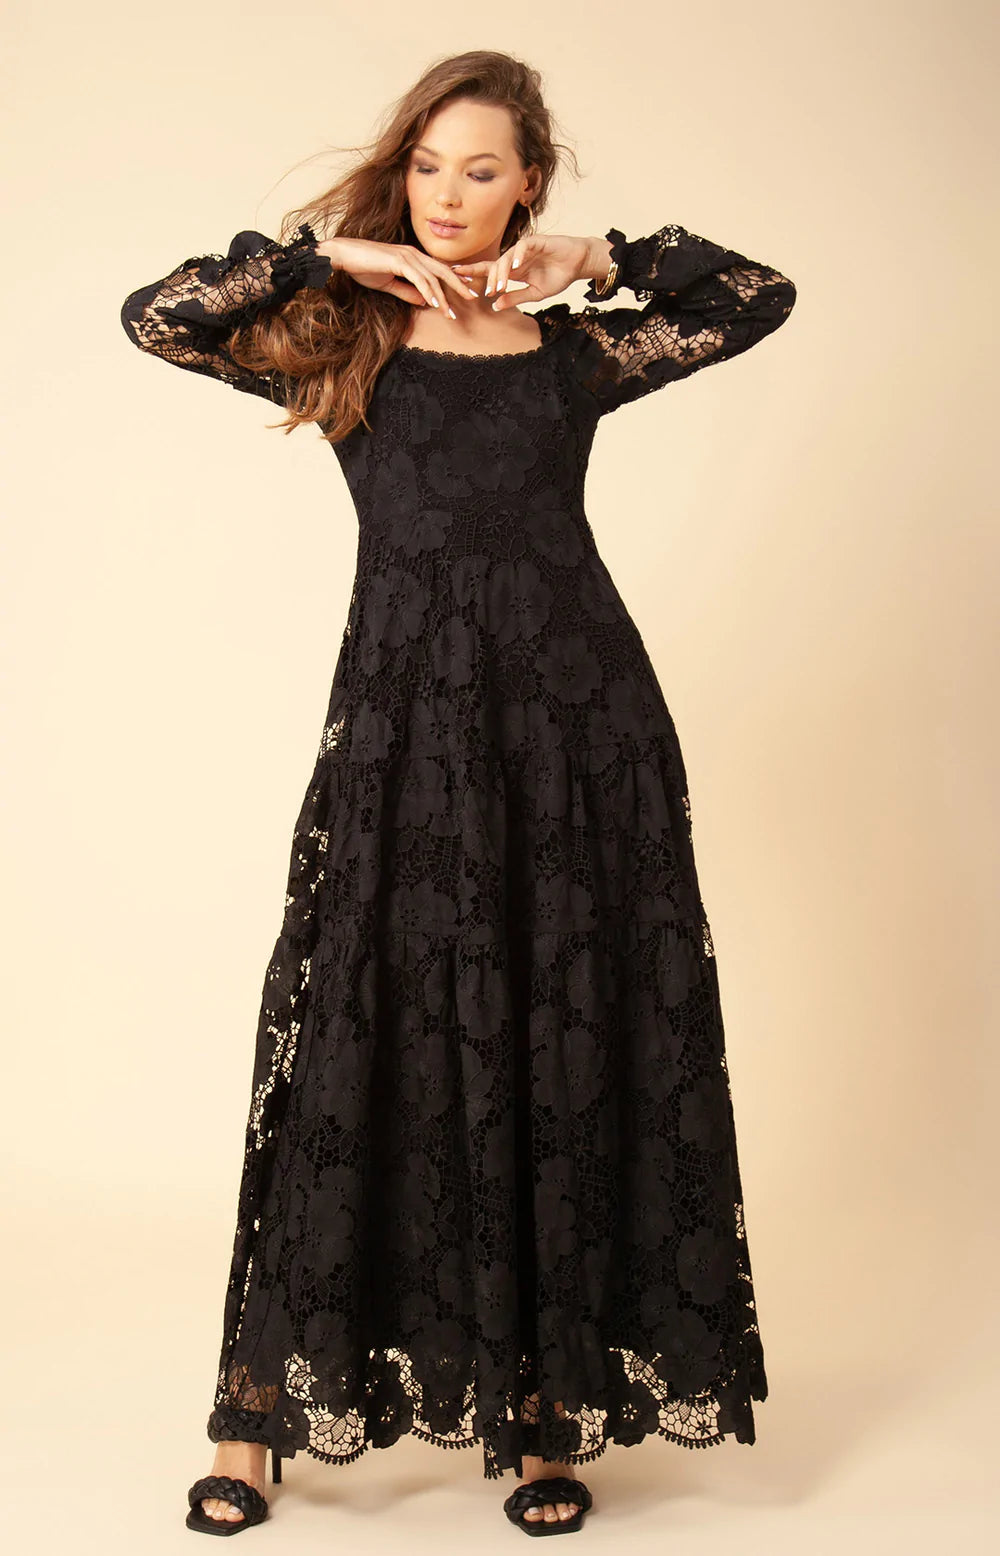 Black Maxi Dresses Are Totally Rachel Zoe's Go-To Look (PHOTOS)